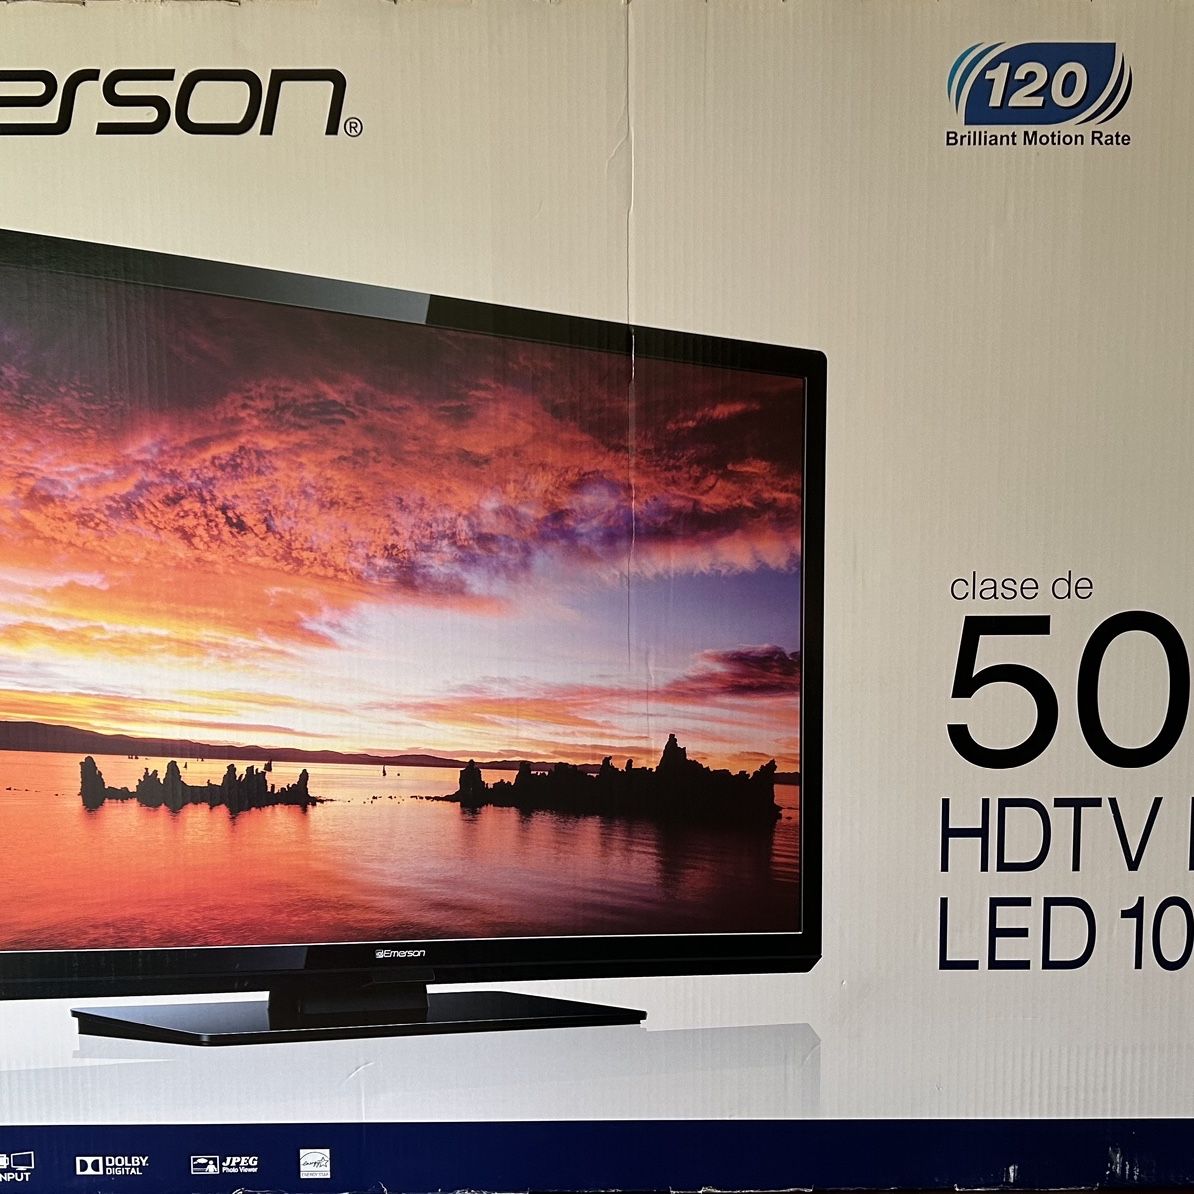 Emerson 50” HDTV LCD LED 1080p